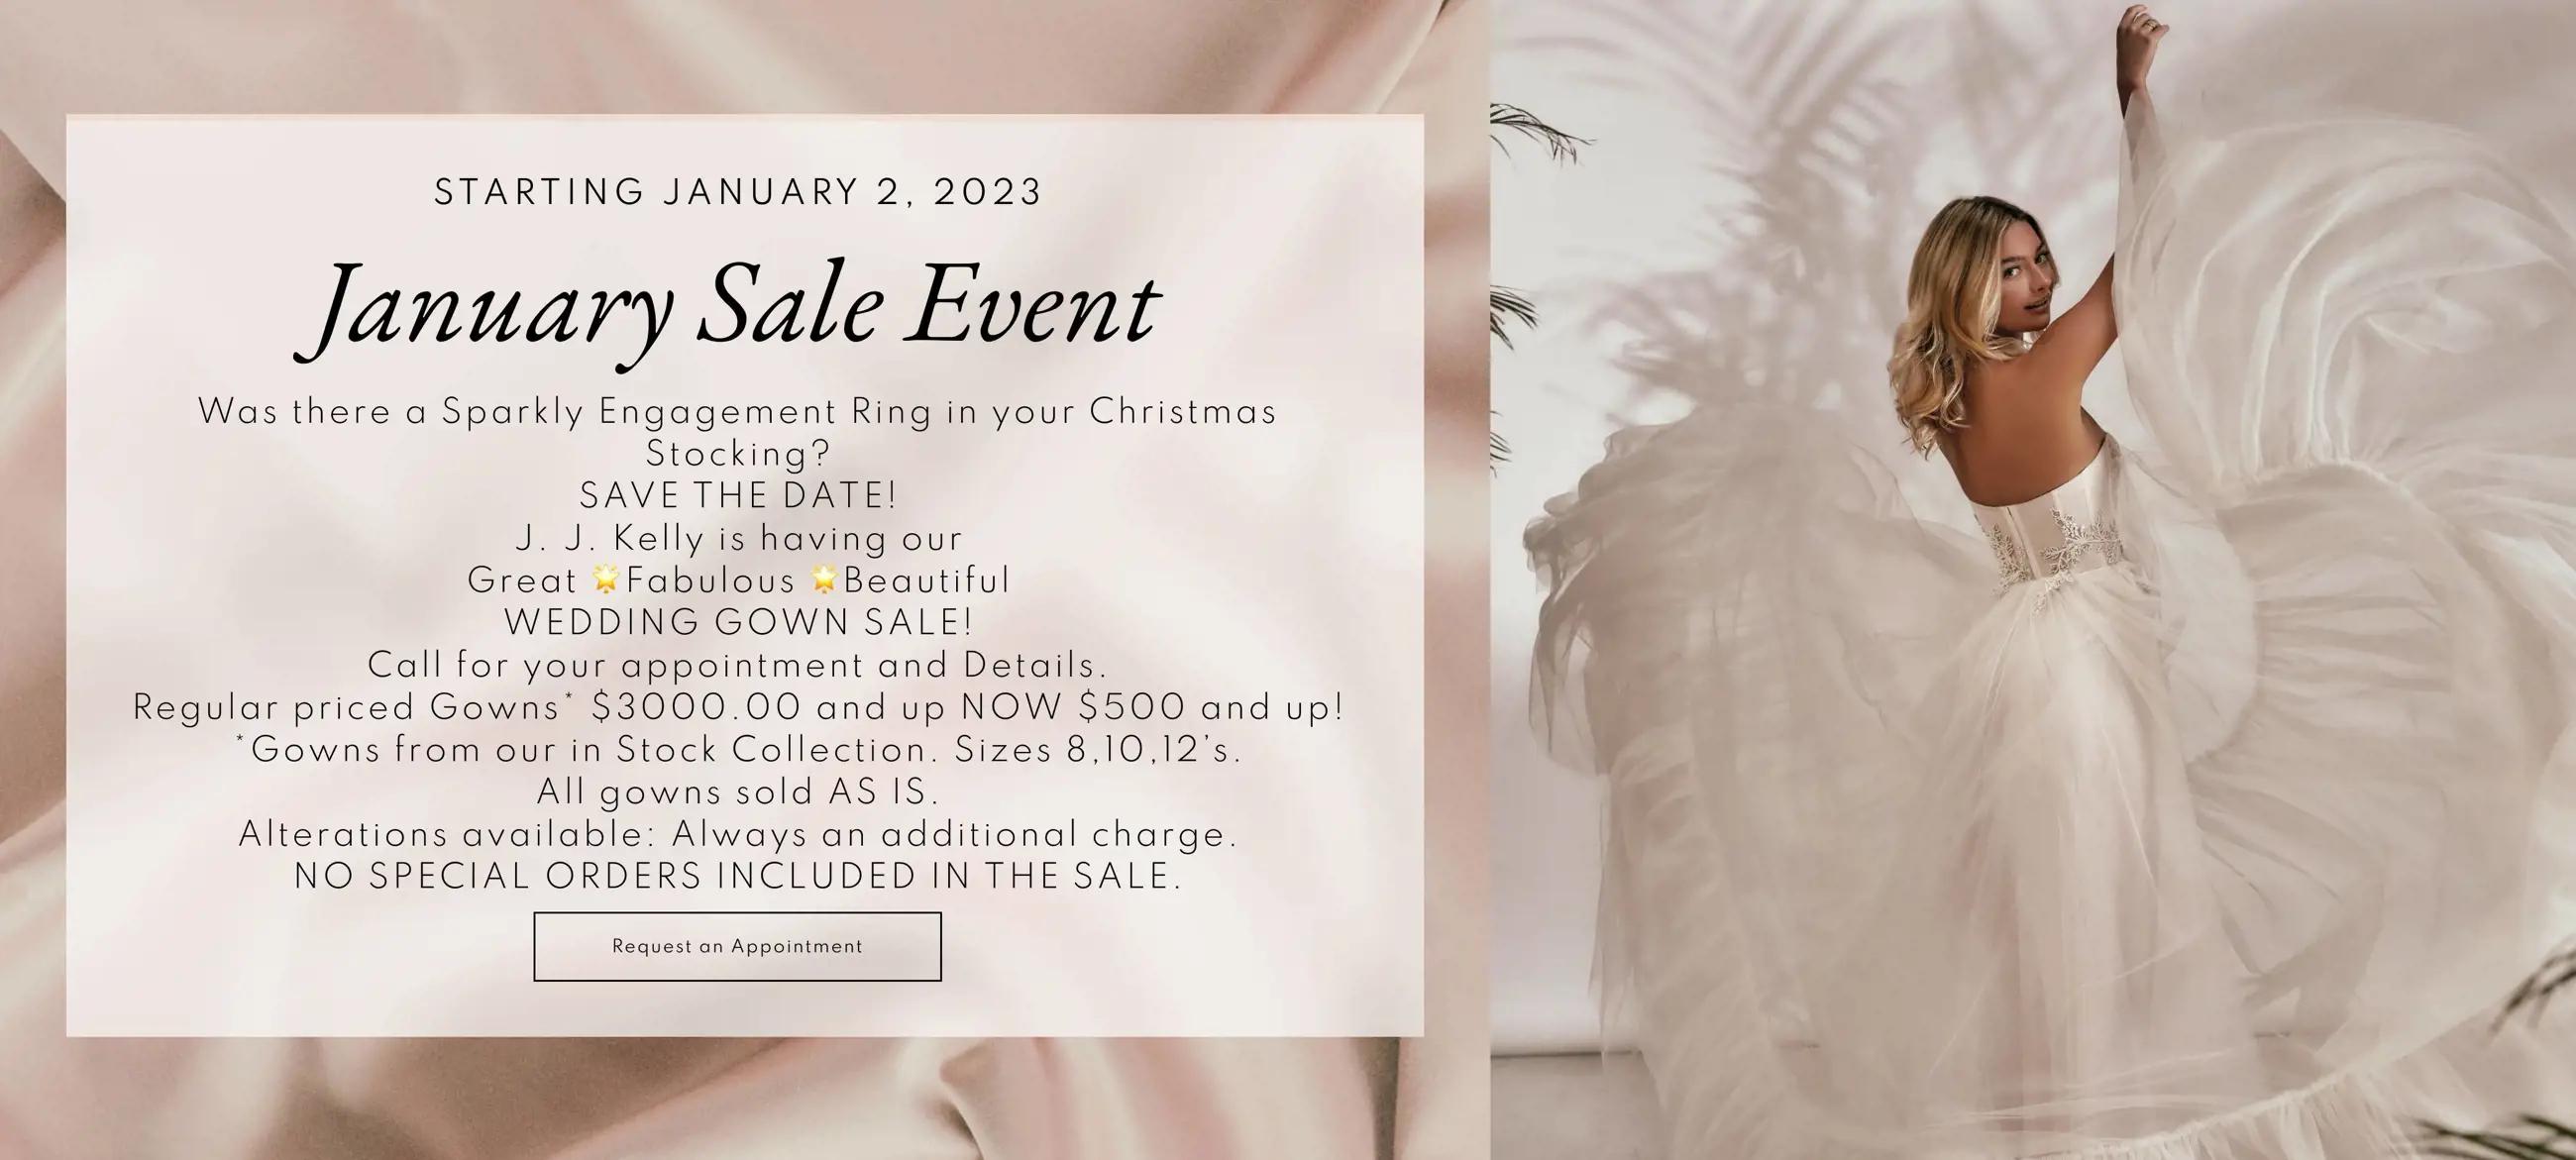 January Sale Event